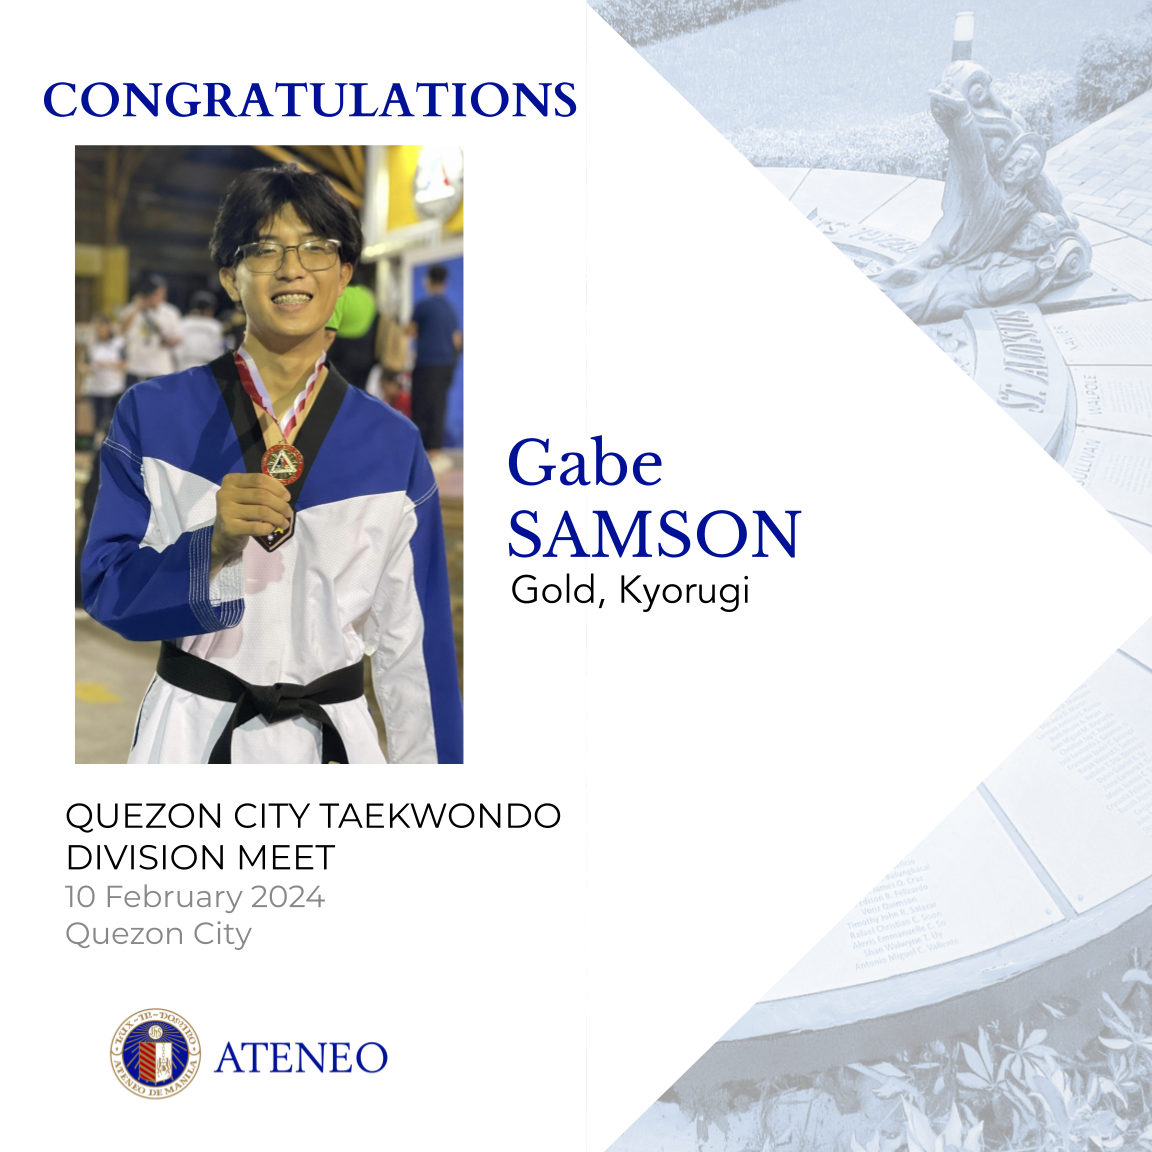 Gold medalist Gabe Samson 